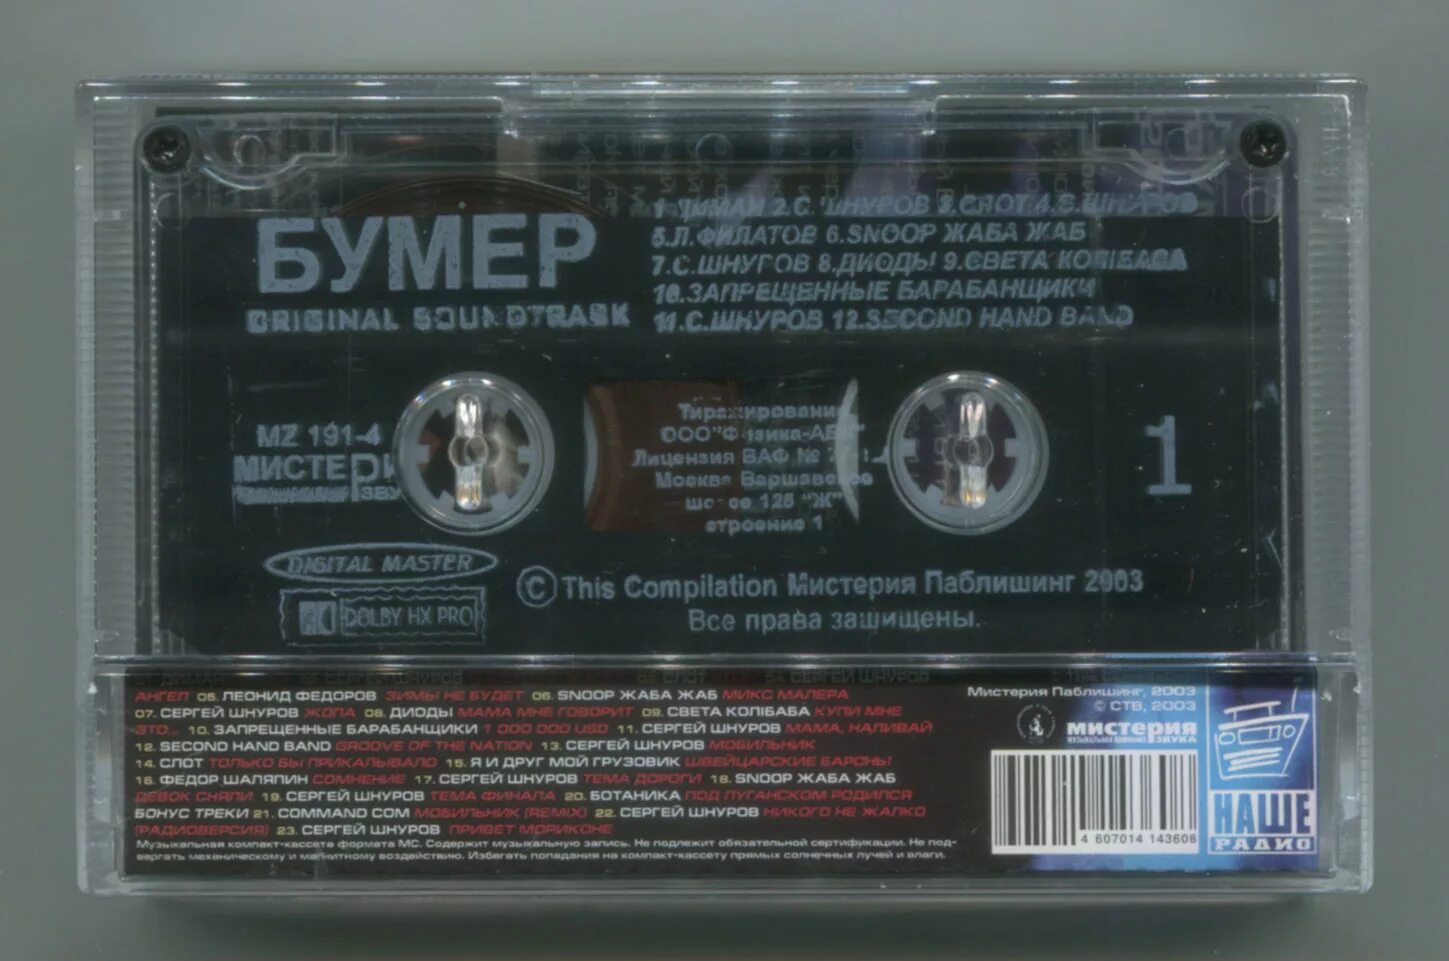 Бумер 2003 DVD. Аудиокассета бумер 2003. Группа бумер кассета. Бумер диск. Бумер сборник песен